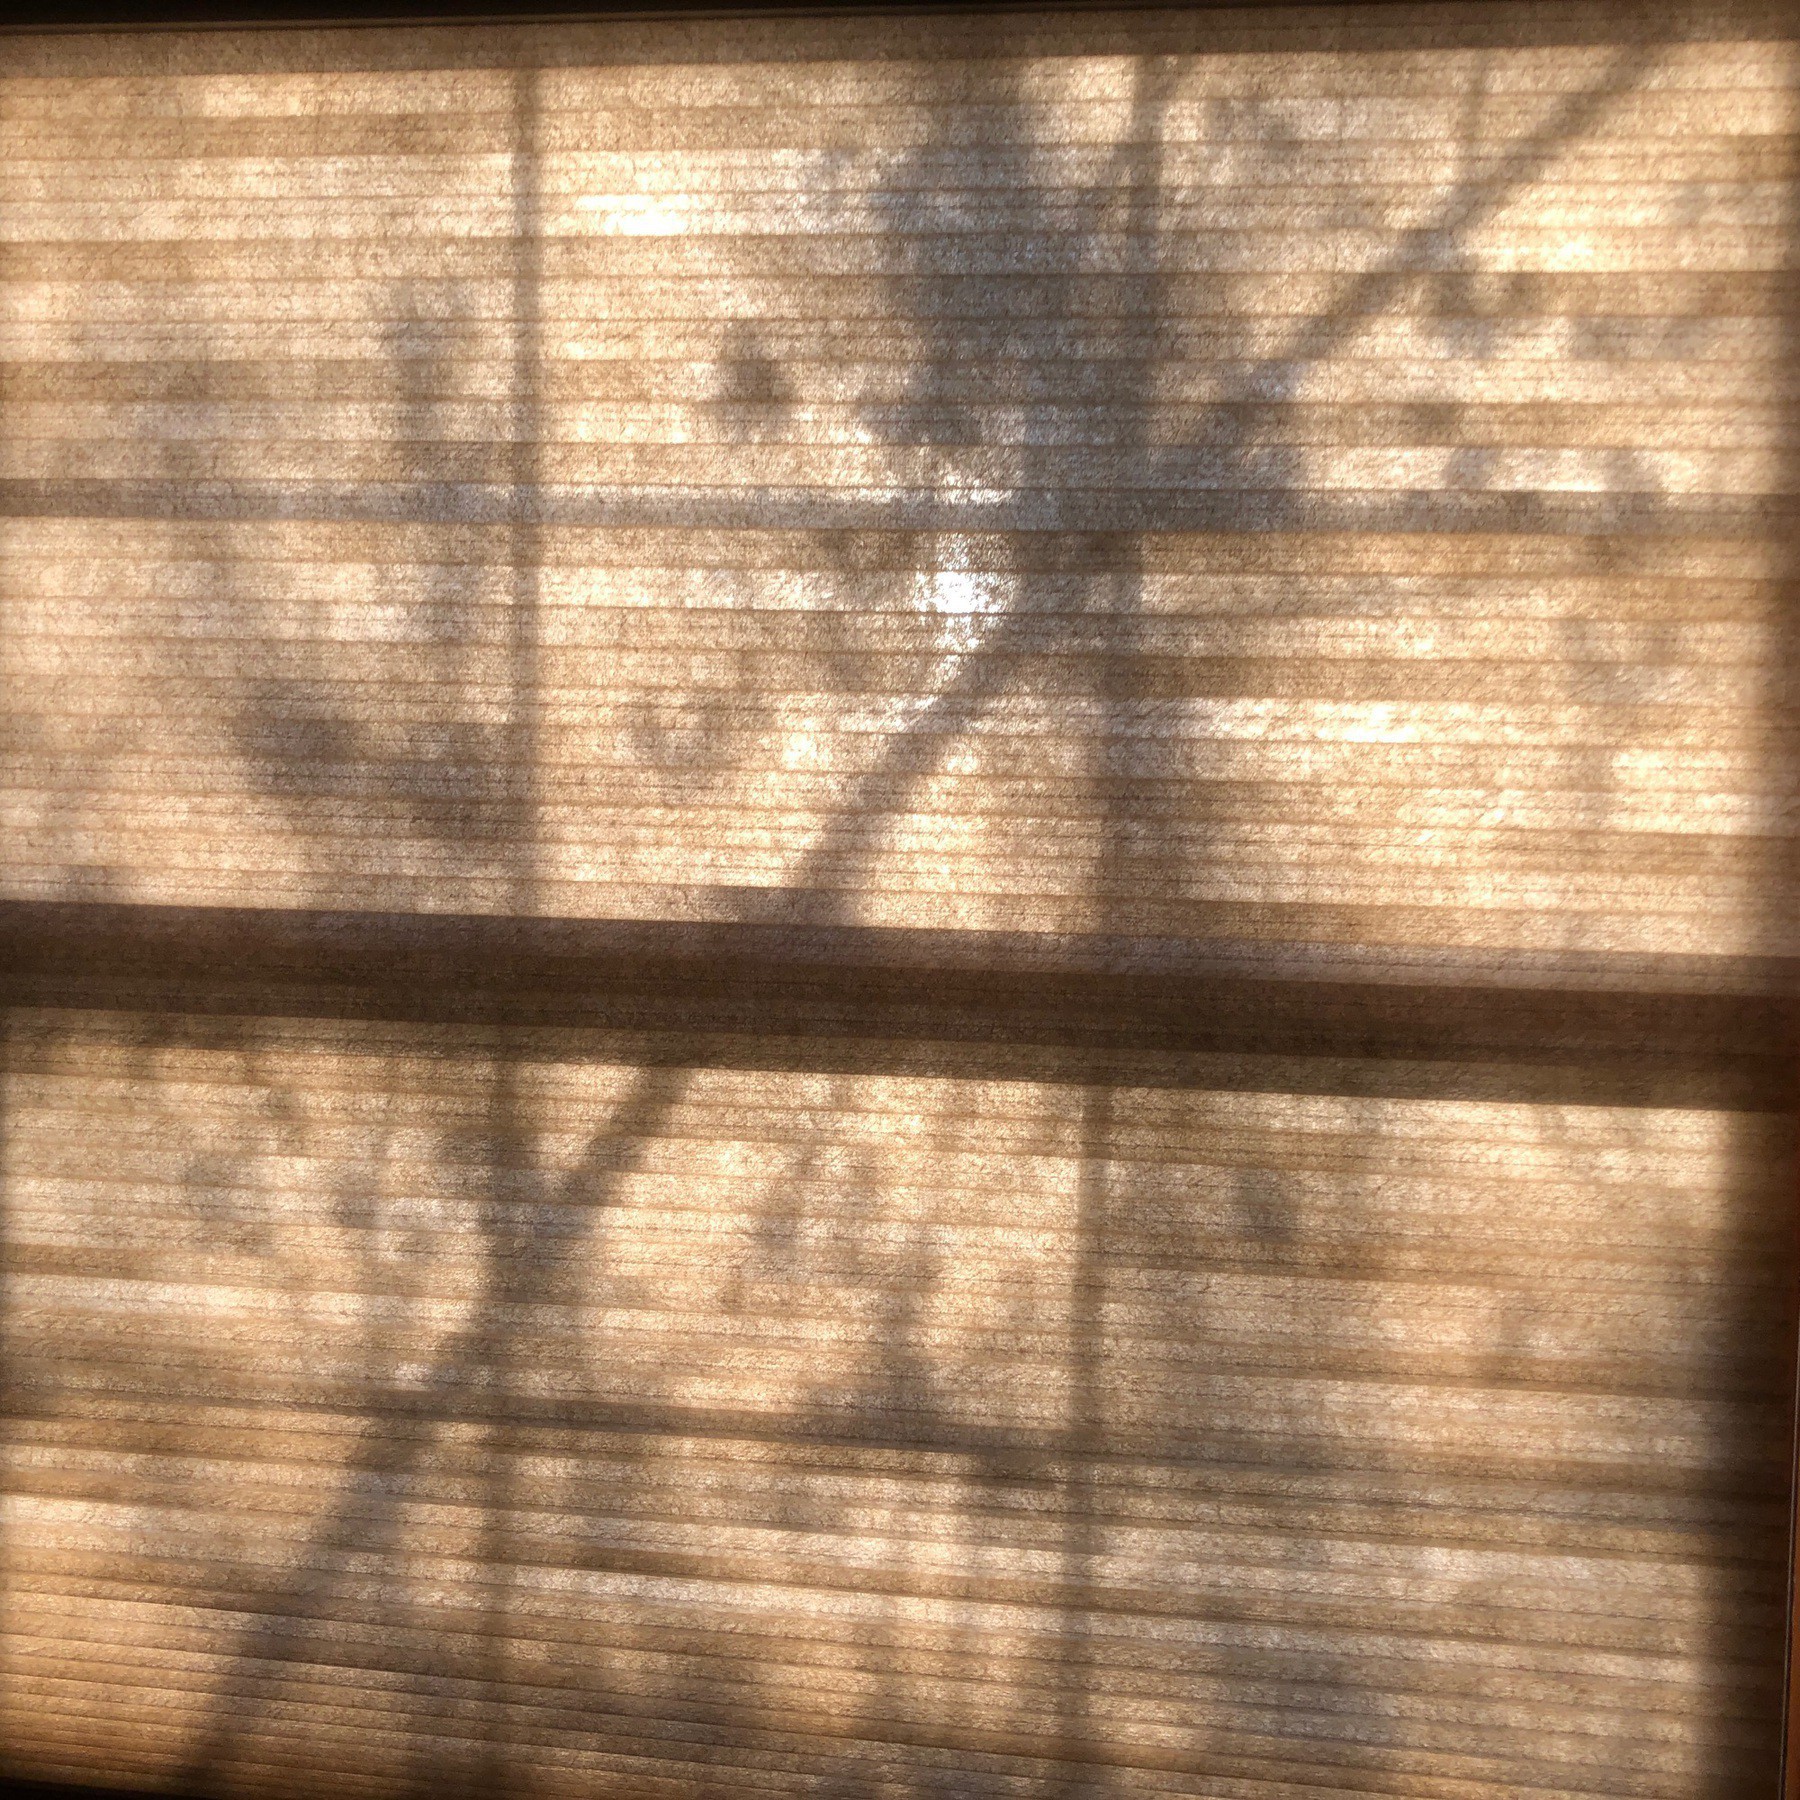 Shadows on window blind.